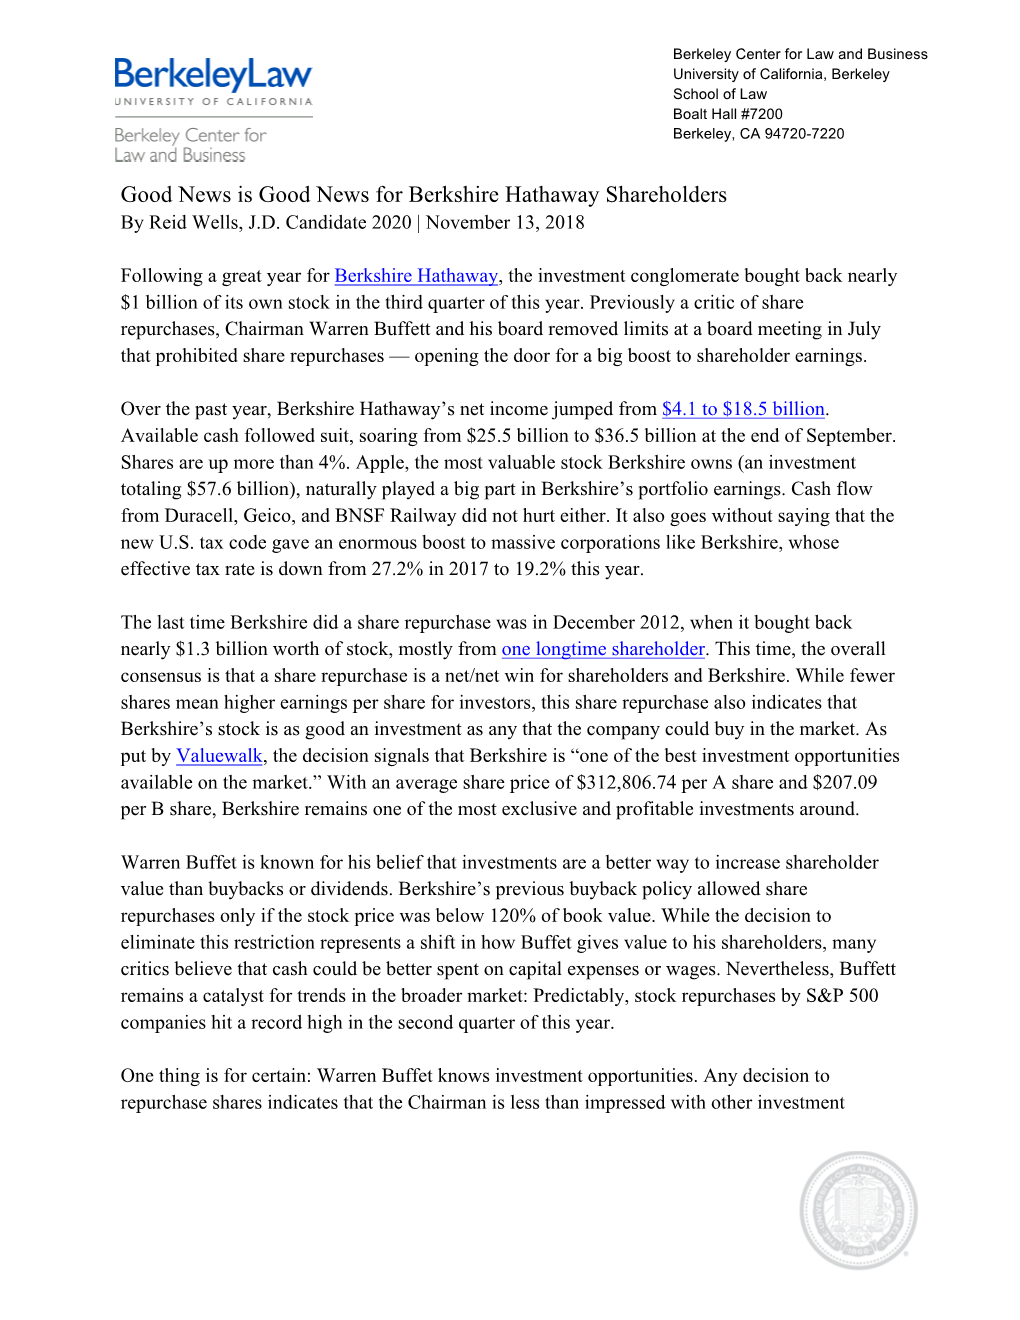 Good News Is Good News for Berkshire Hathaway Shareholders by Reid Wells, J.D